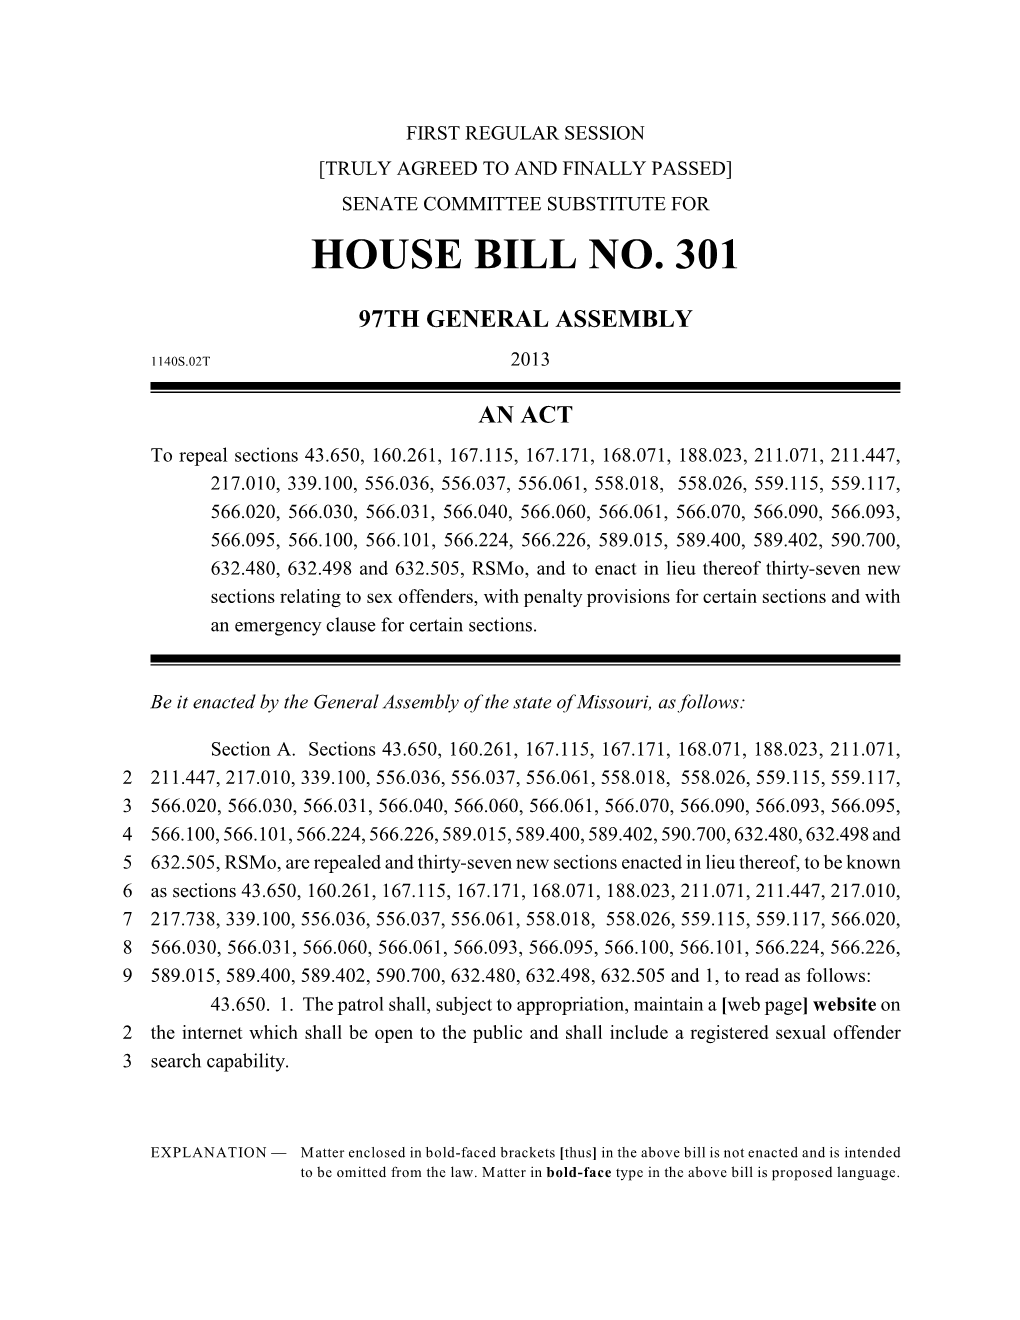 House Bill No. 301